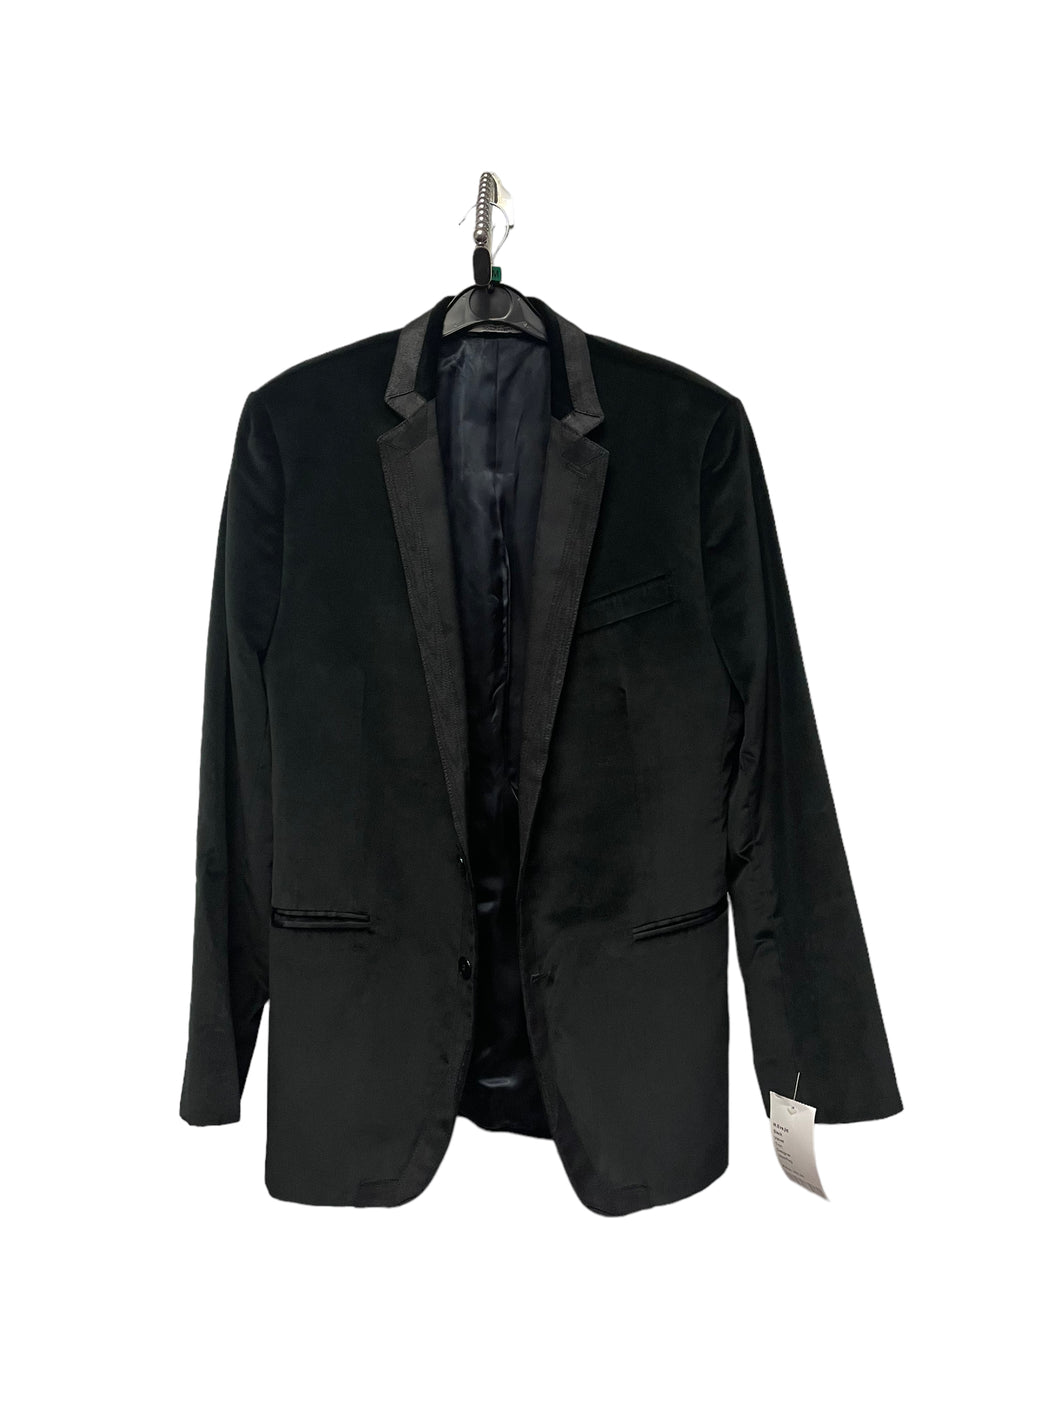 Dolce & Gabbana Men’s evening jacket. Size medium